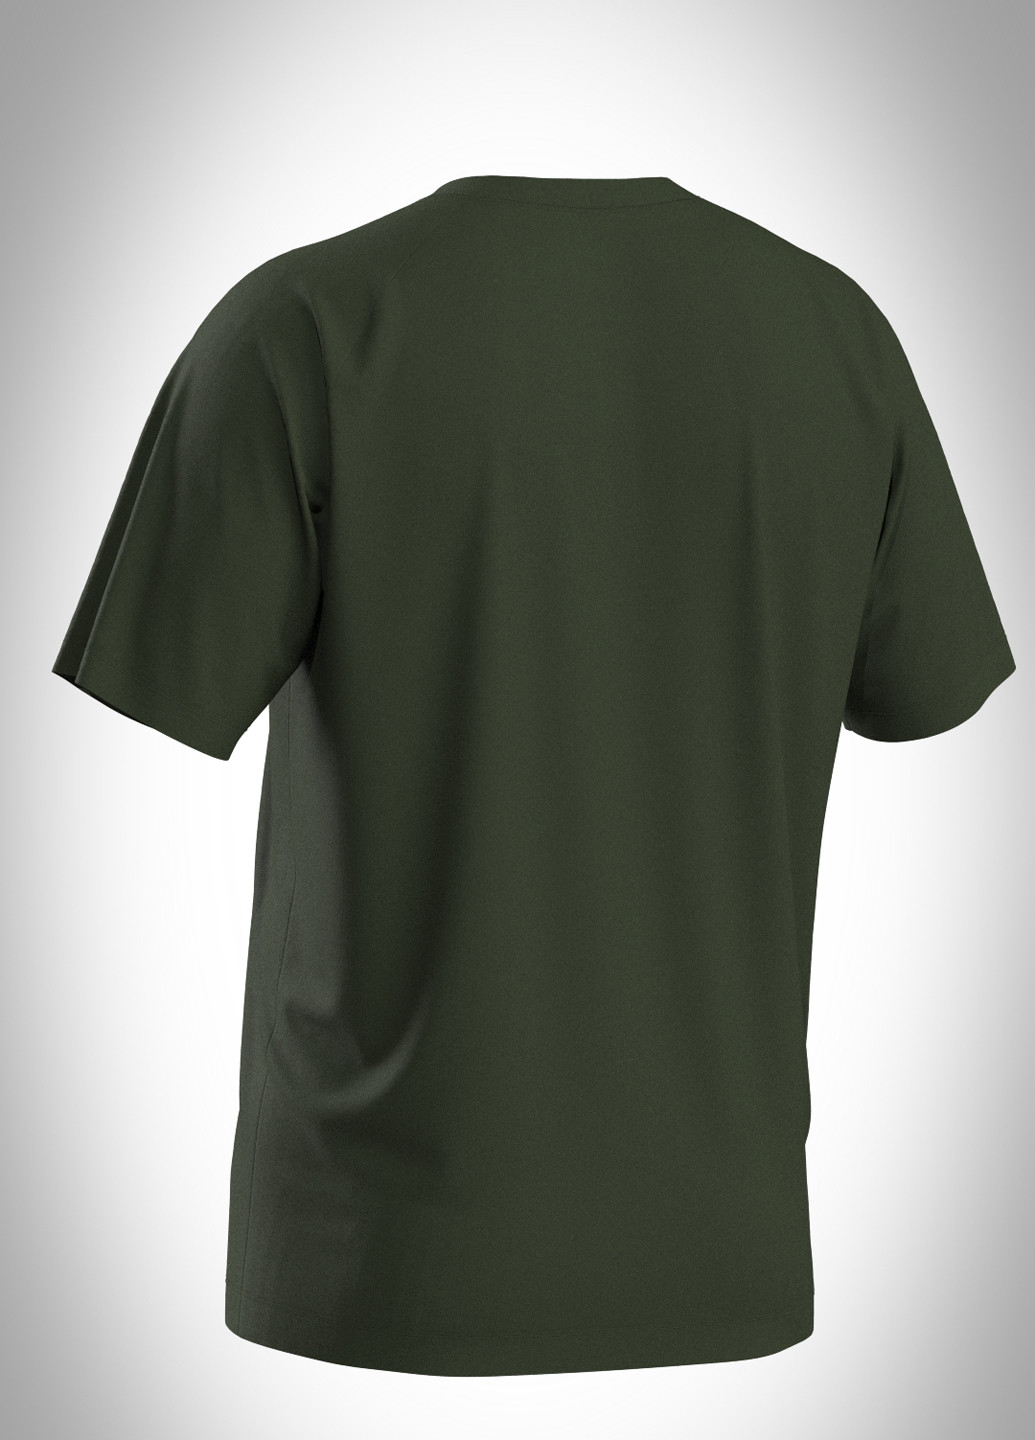 Хаки (оливковая) футболка SA-sport